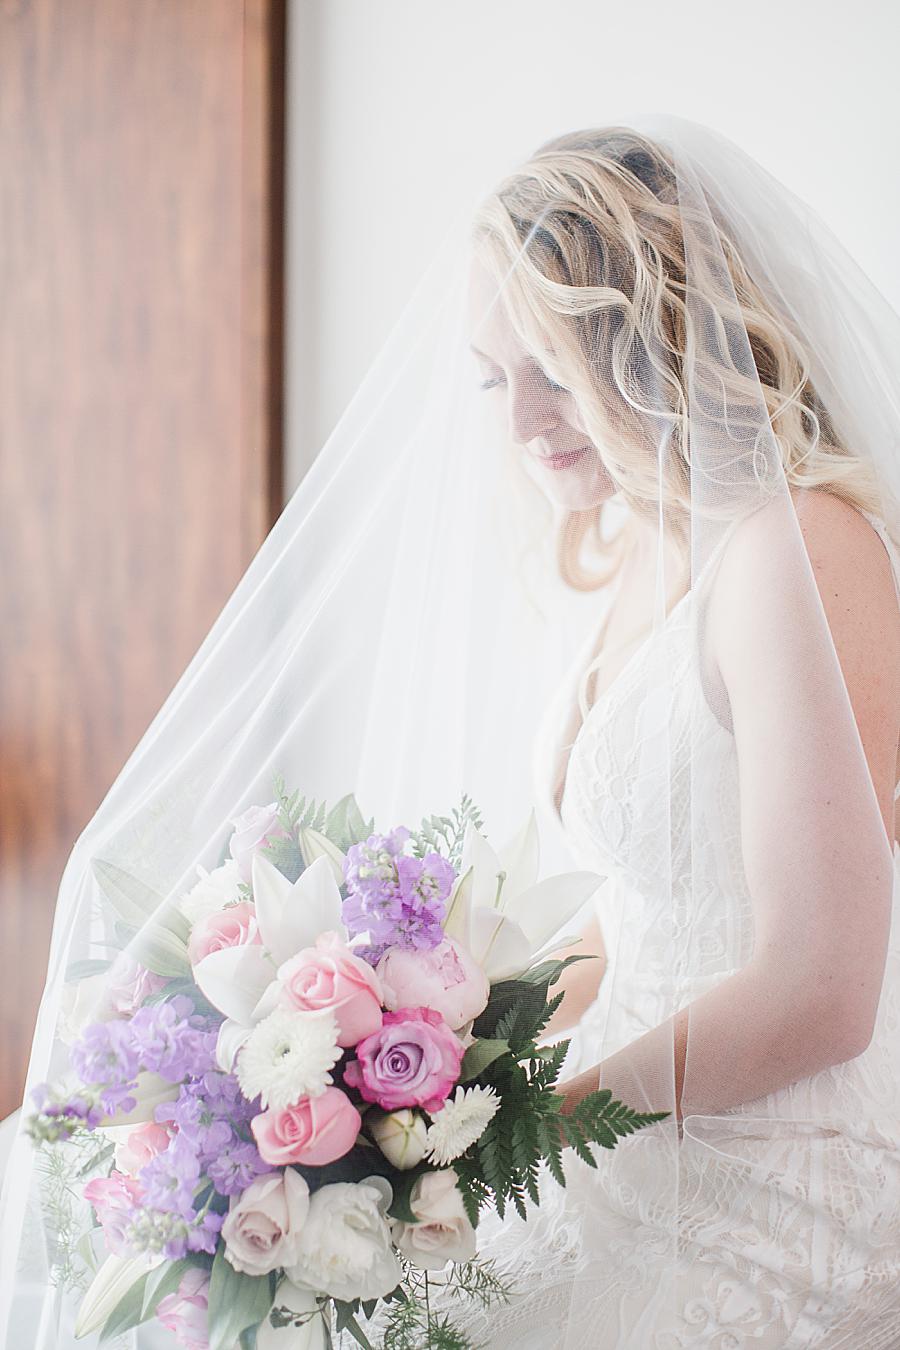 Under the veil pose at this Dayton wedding by Knoxville Wedding Photographer, Amanda May Photos.